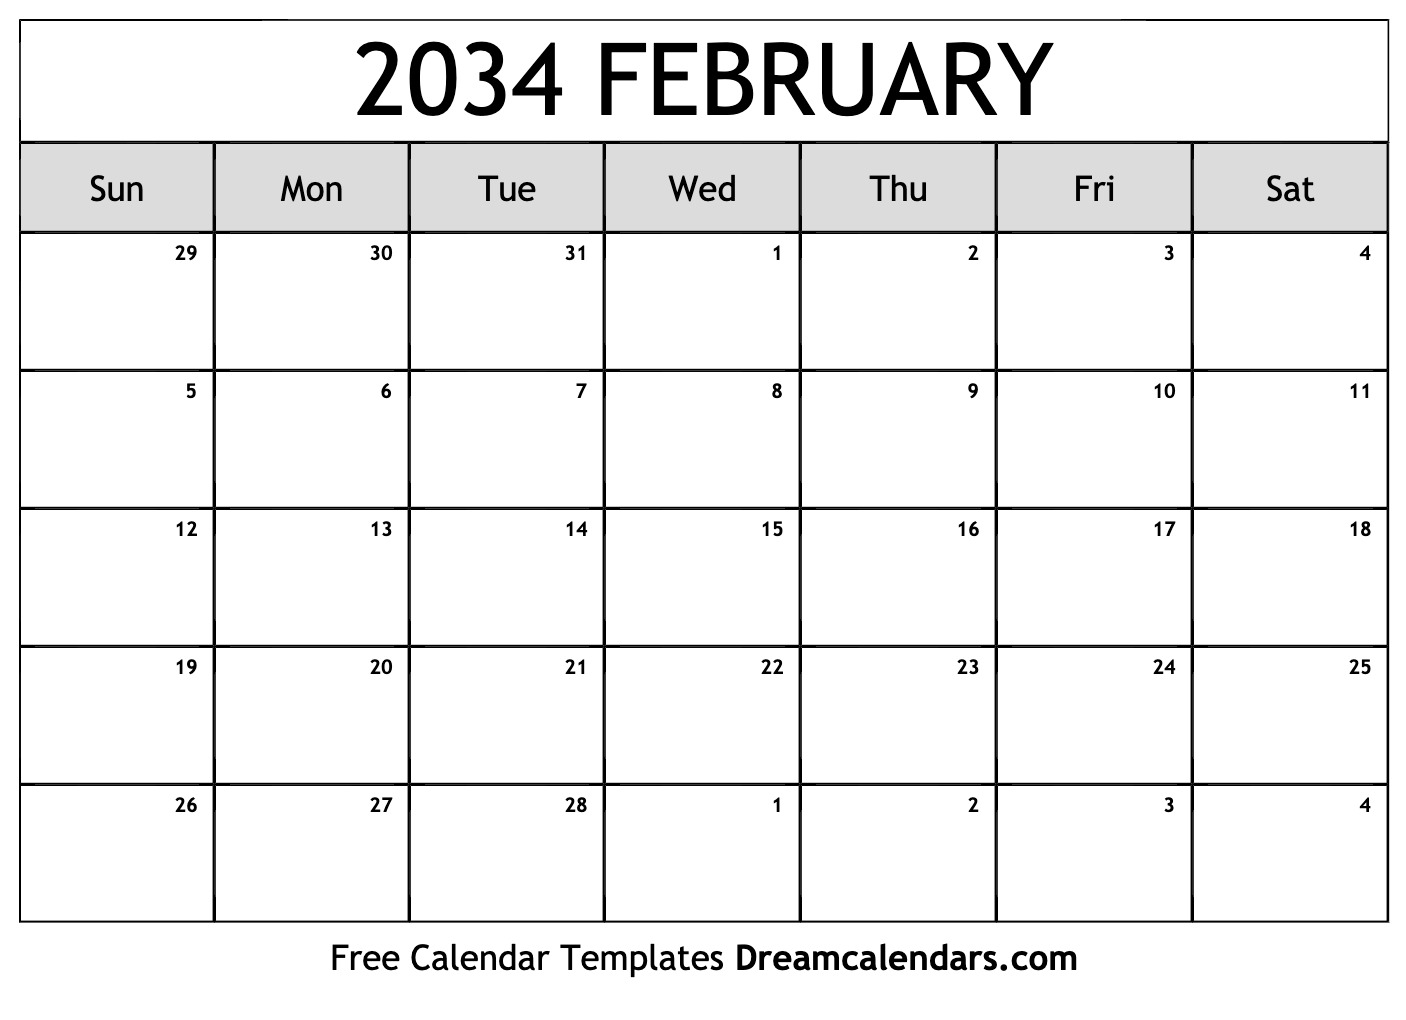 February 2034 Calendar Free Blank Printable With Holidays